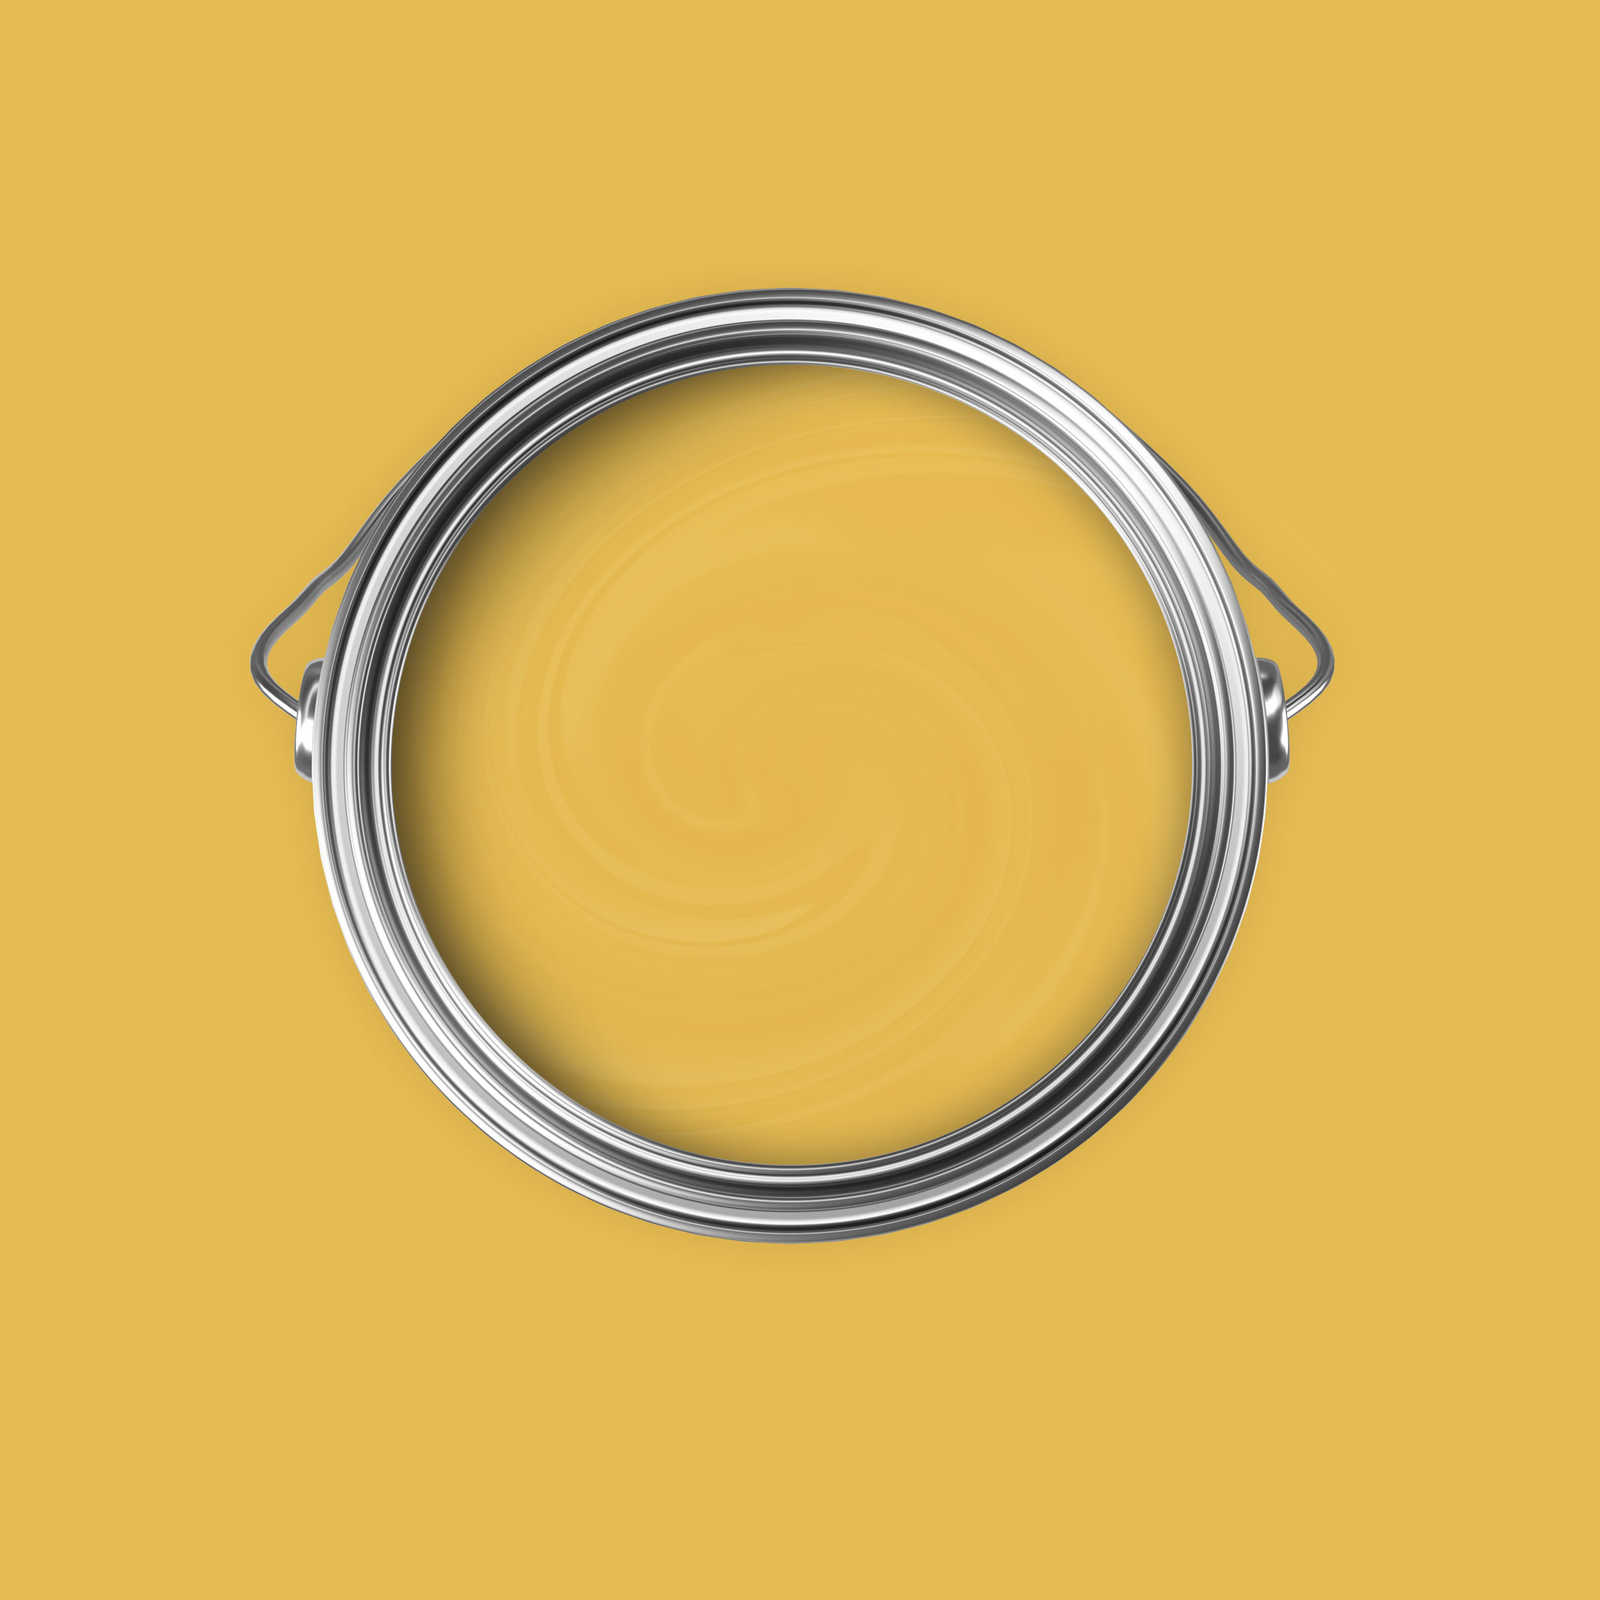             Premium Wandfarbe aktive Vanille »Juicy Yellow« NW803 – 5 Liter
        